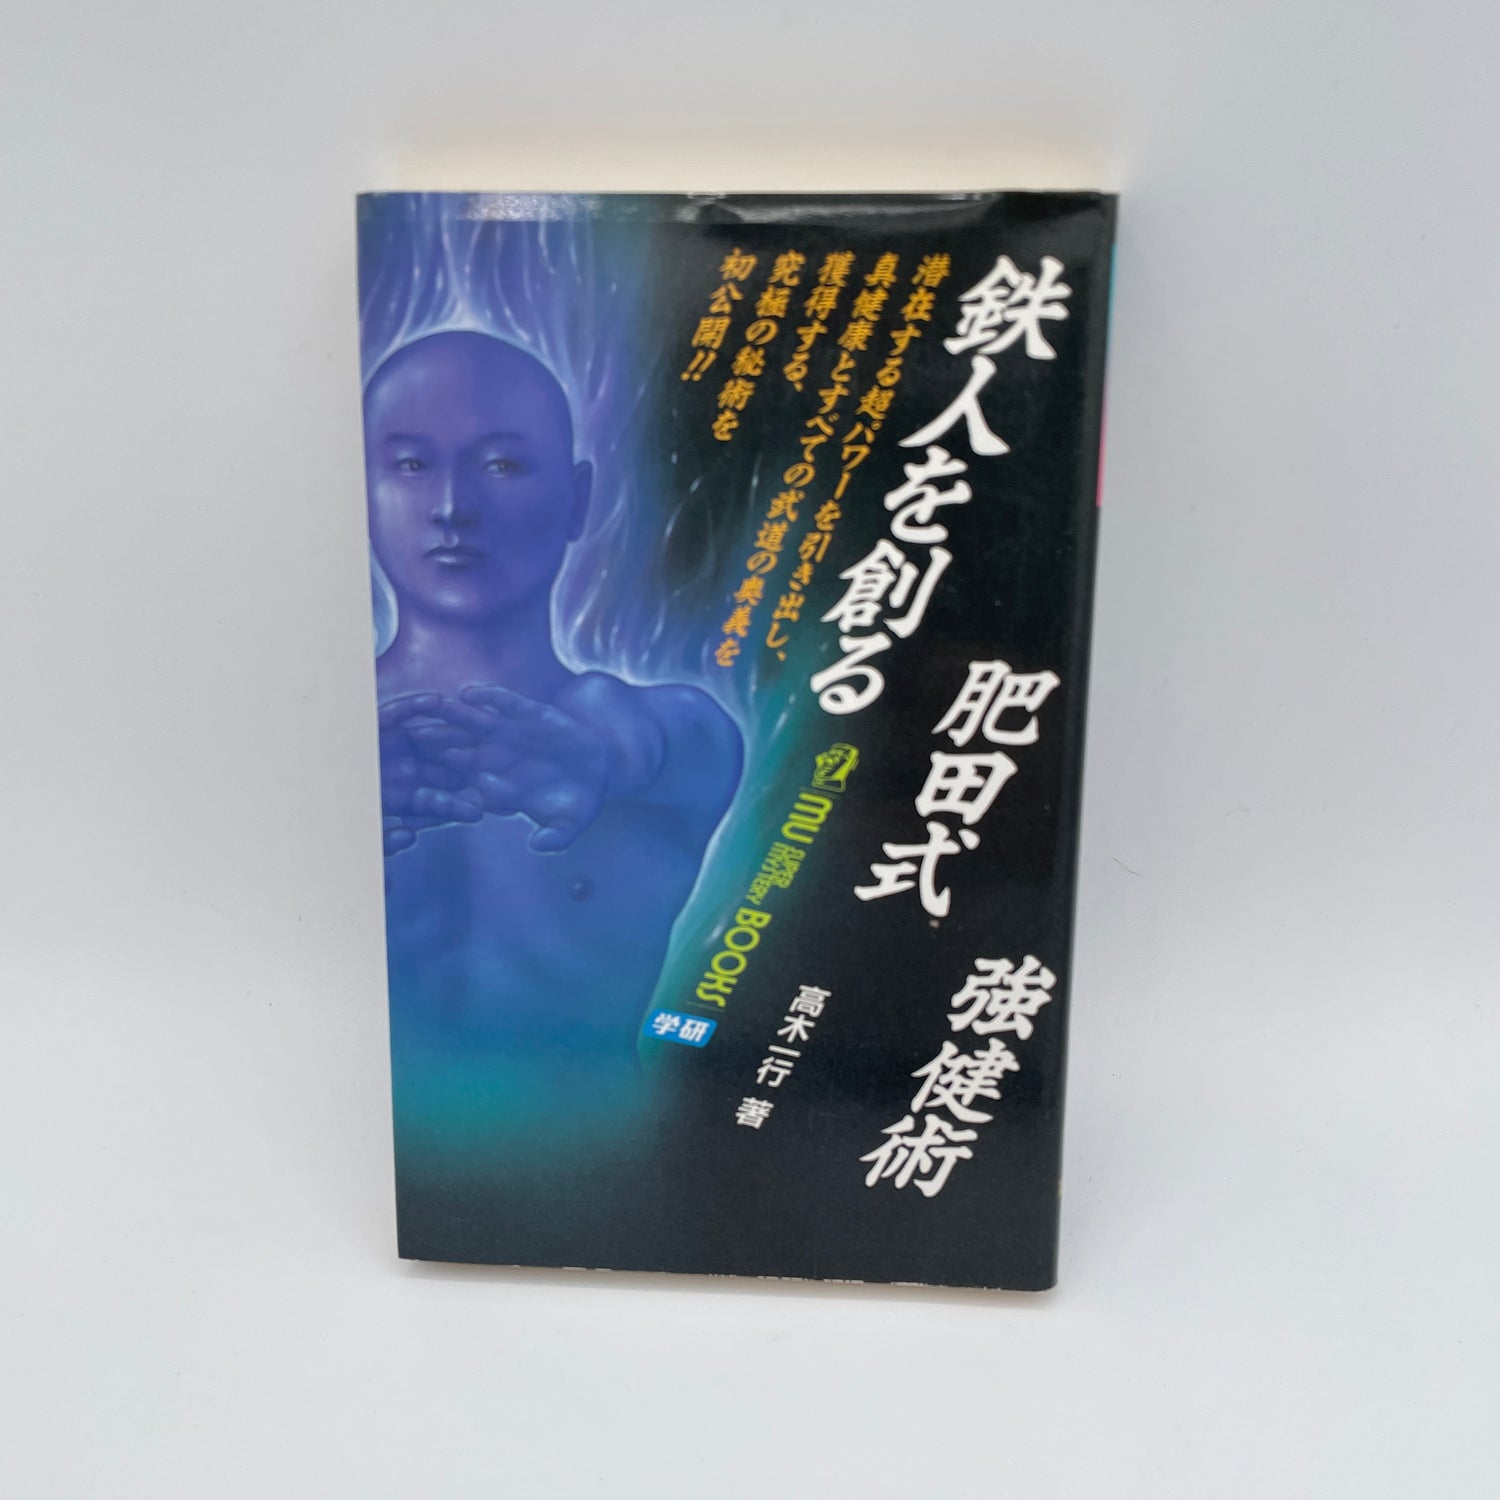 Hida Style Strong Technique Book 1: Create an Iron Body by Ikko Takagi (Preowned)